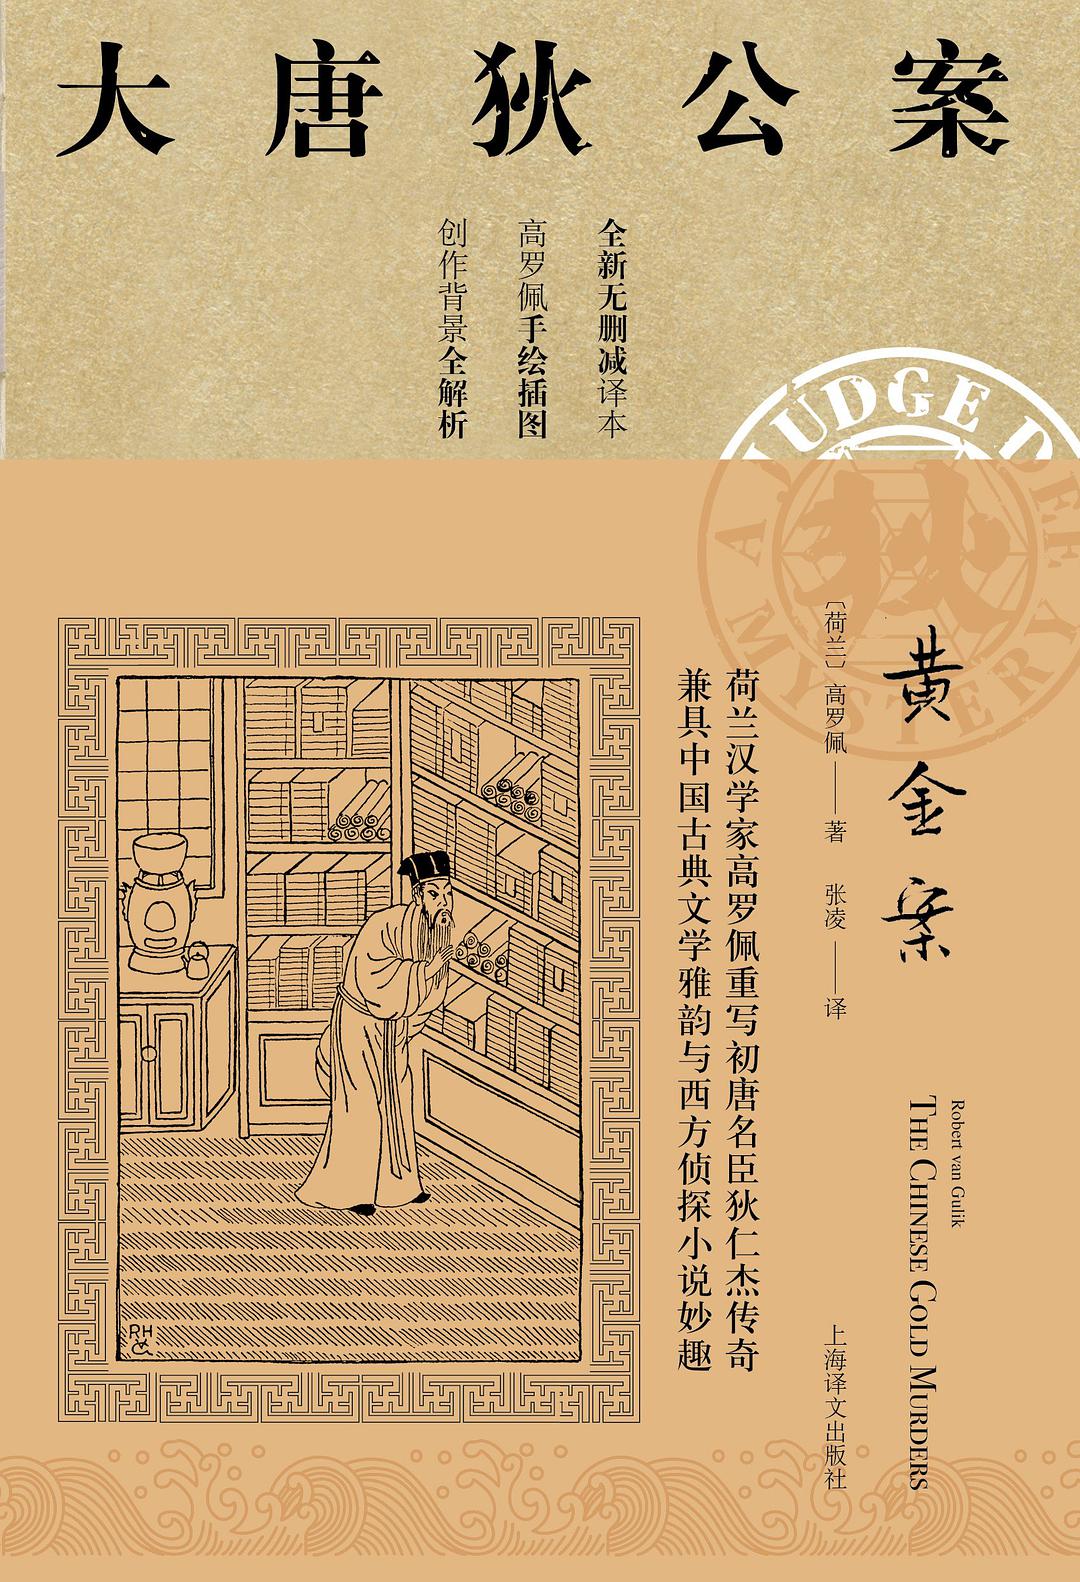 Robert van Gulik: 黄金案 (Chinese language, 2019, 上海译文出版社)